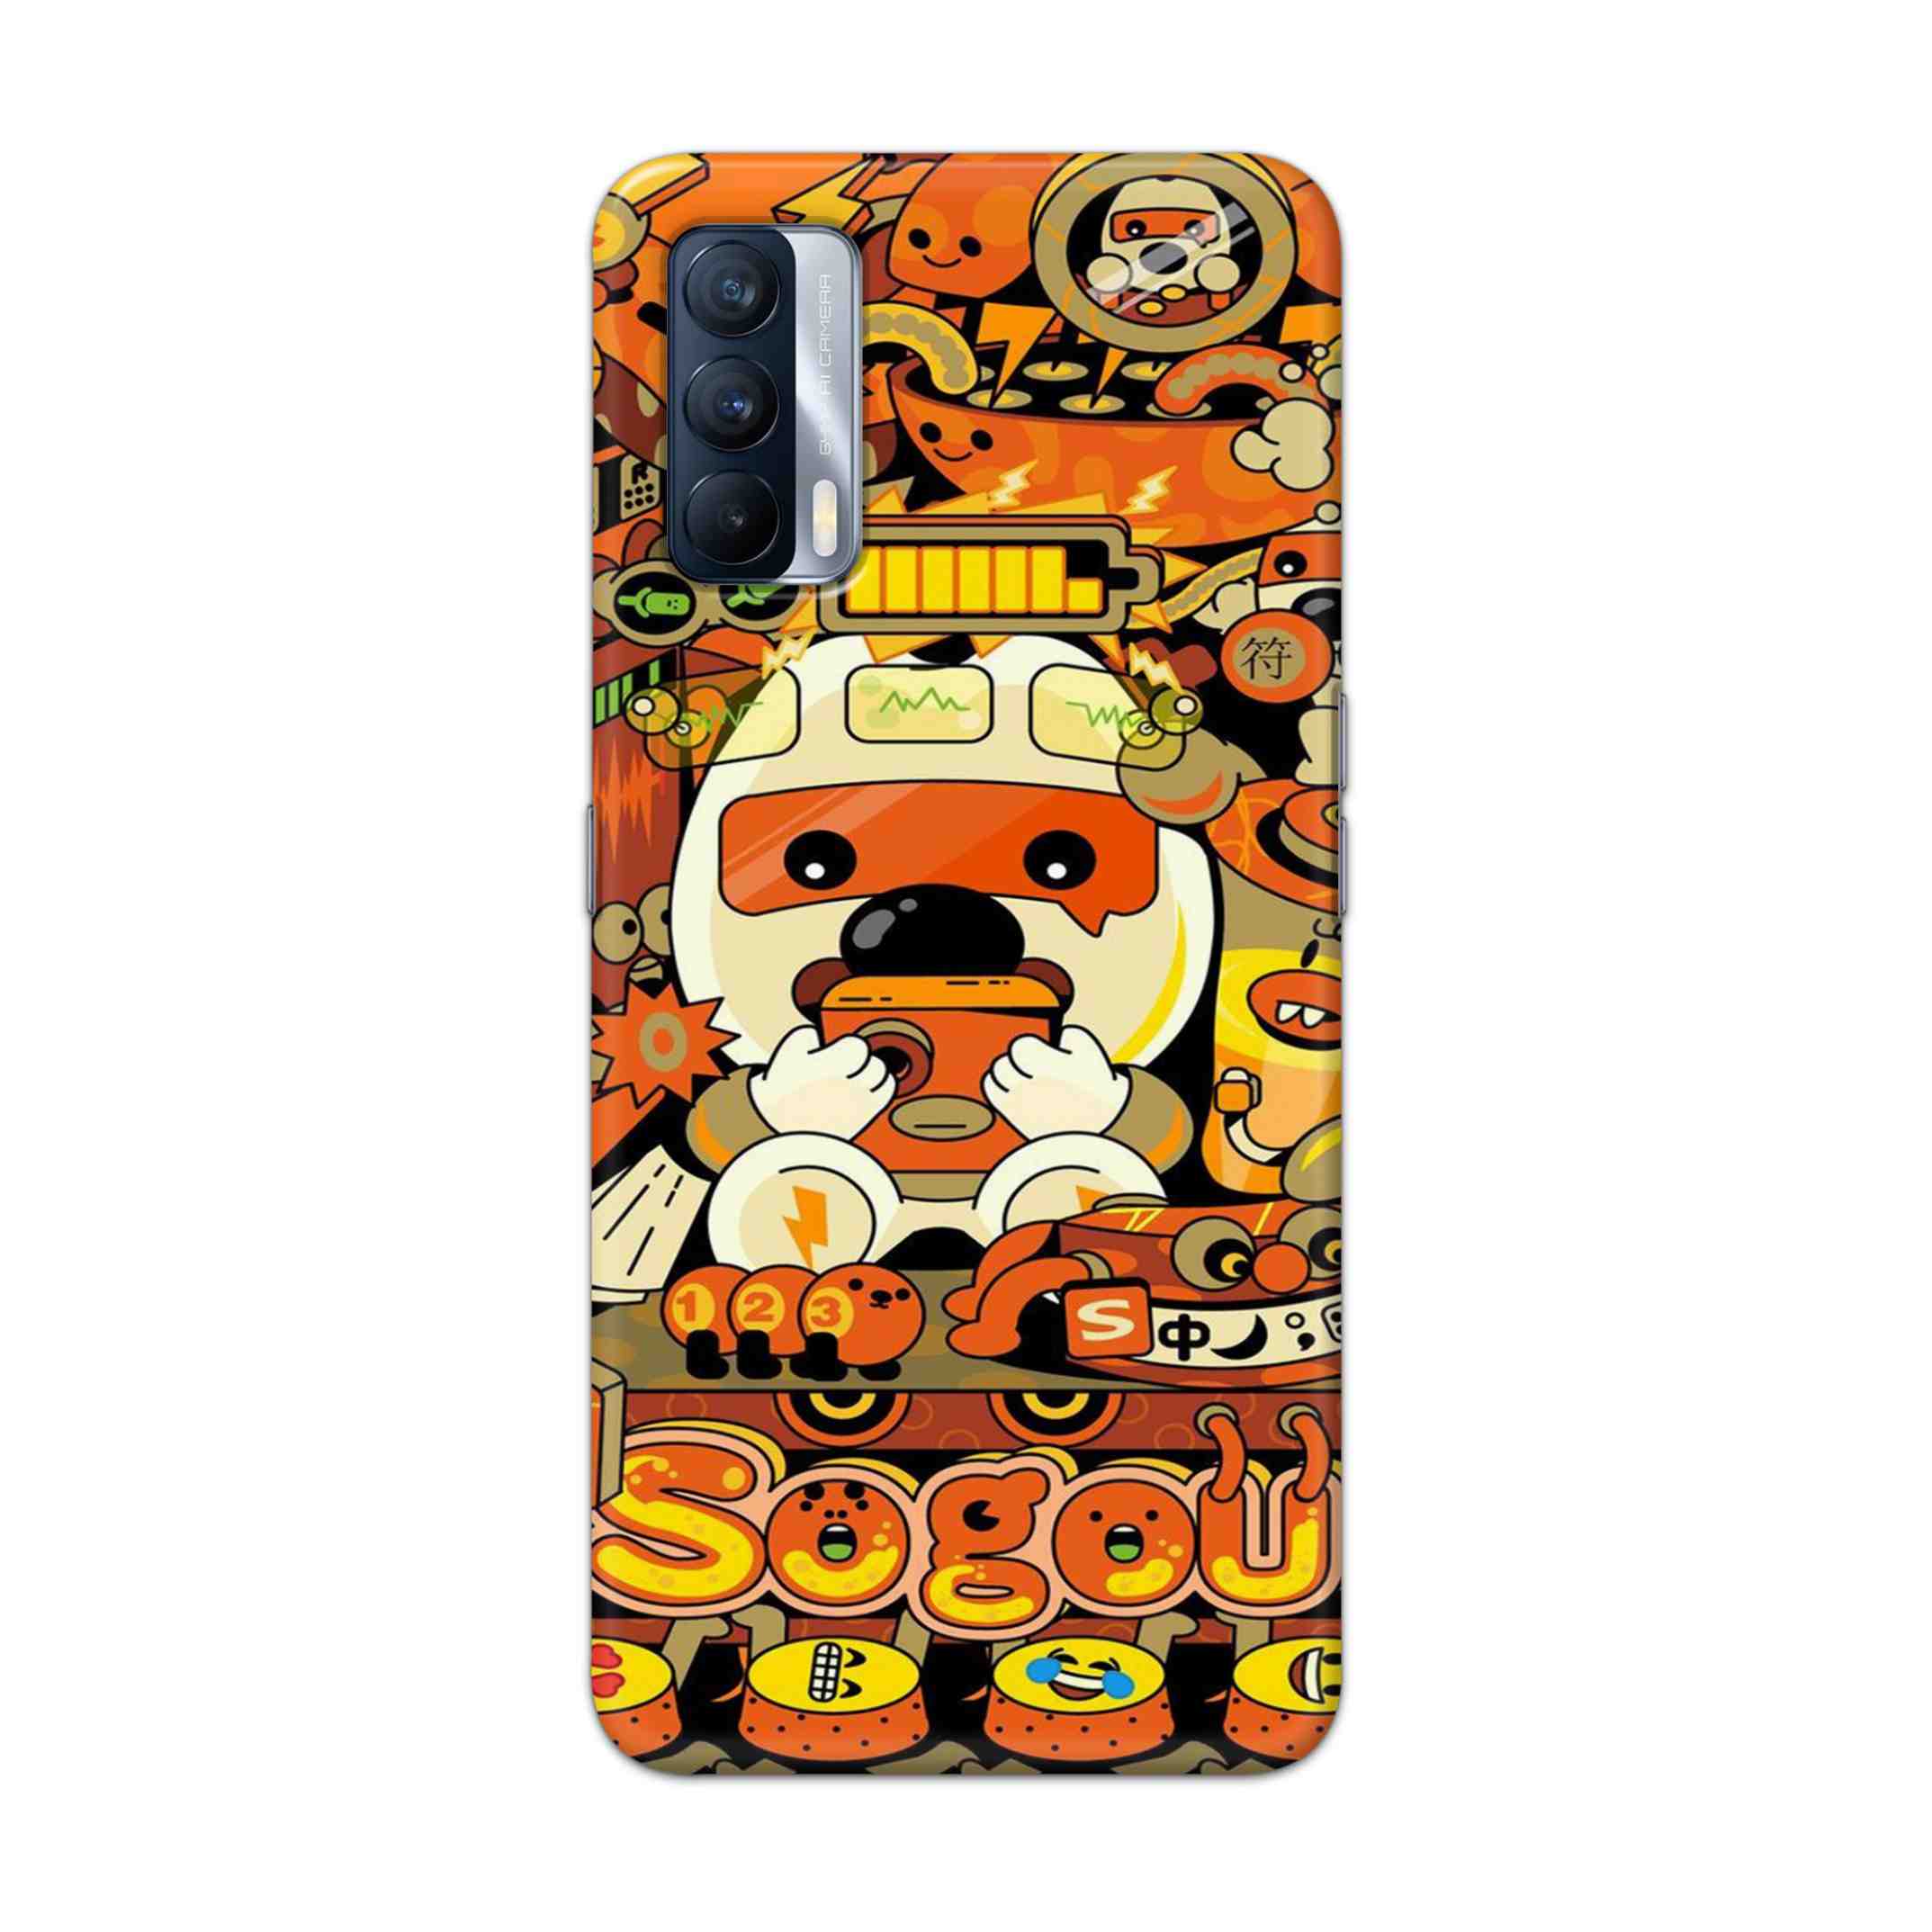 Buy Sogou Hard Back Mobile Phone Case Cover For Realme X7 Online